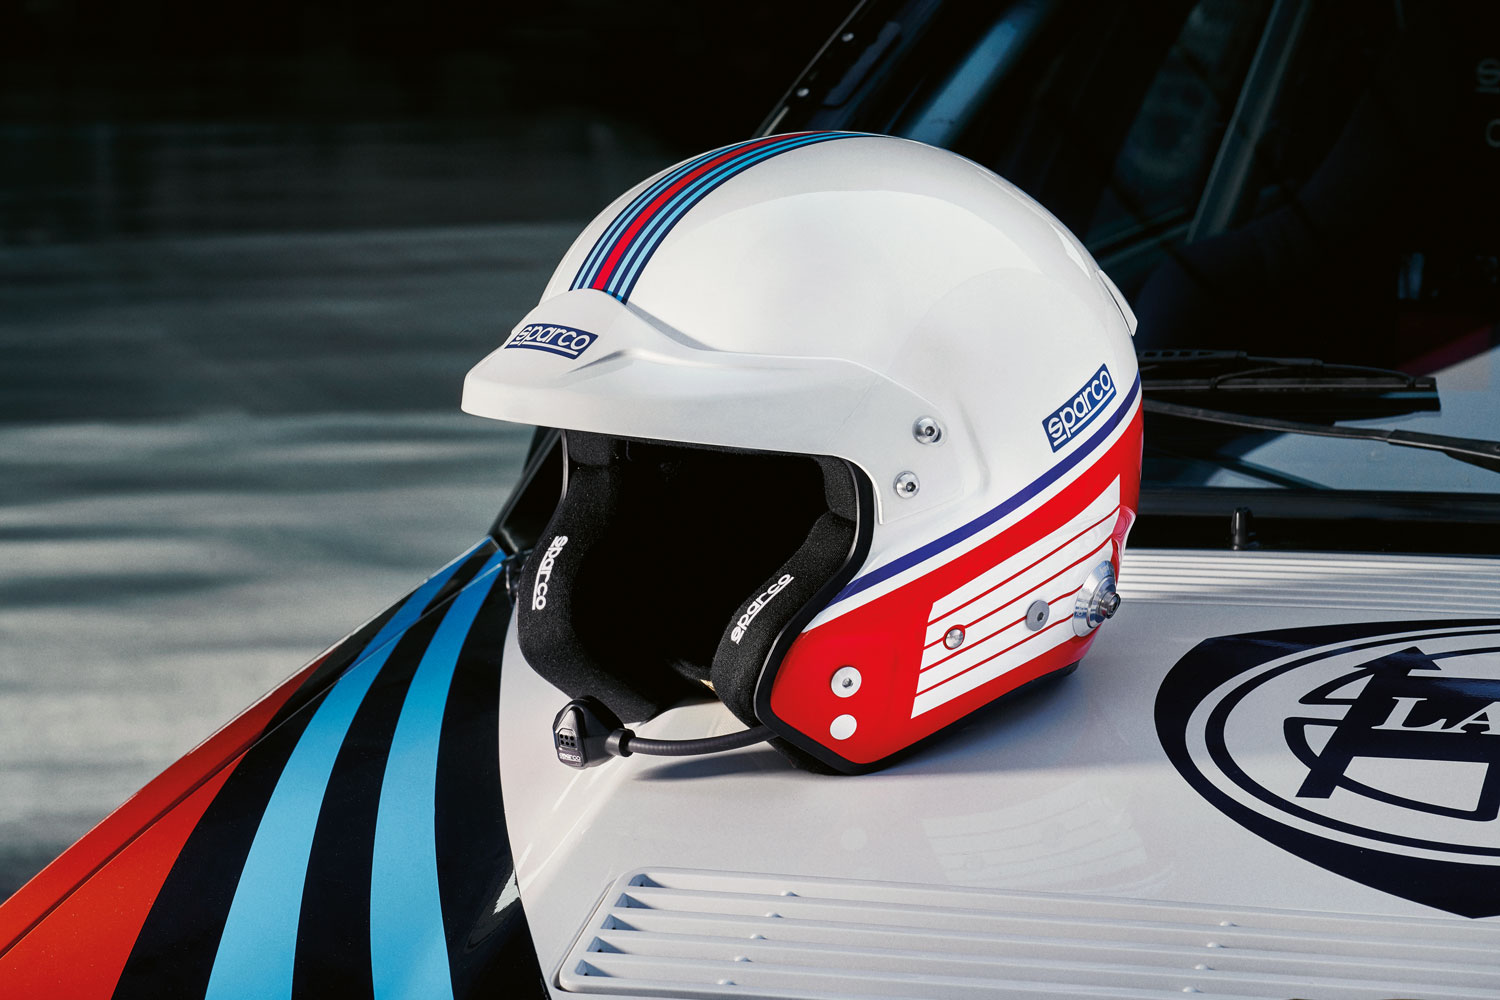 Sparco Helm Martini Racing (Streifen-Design)